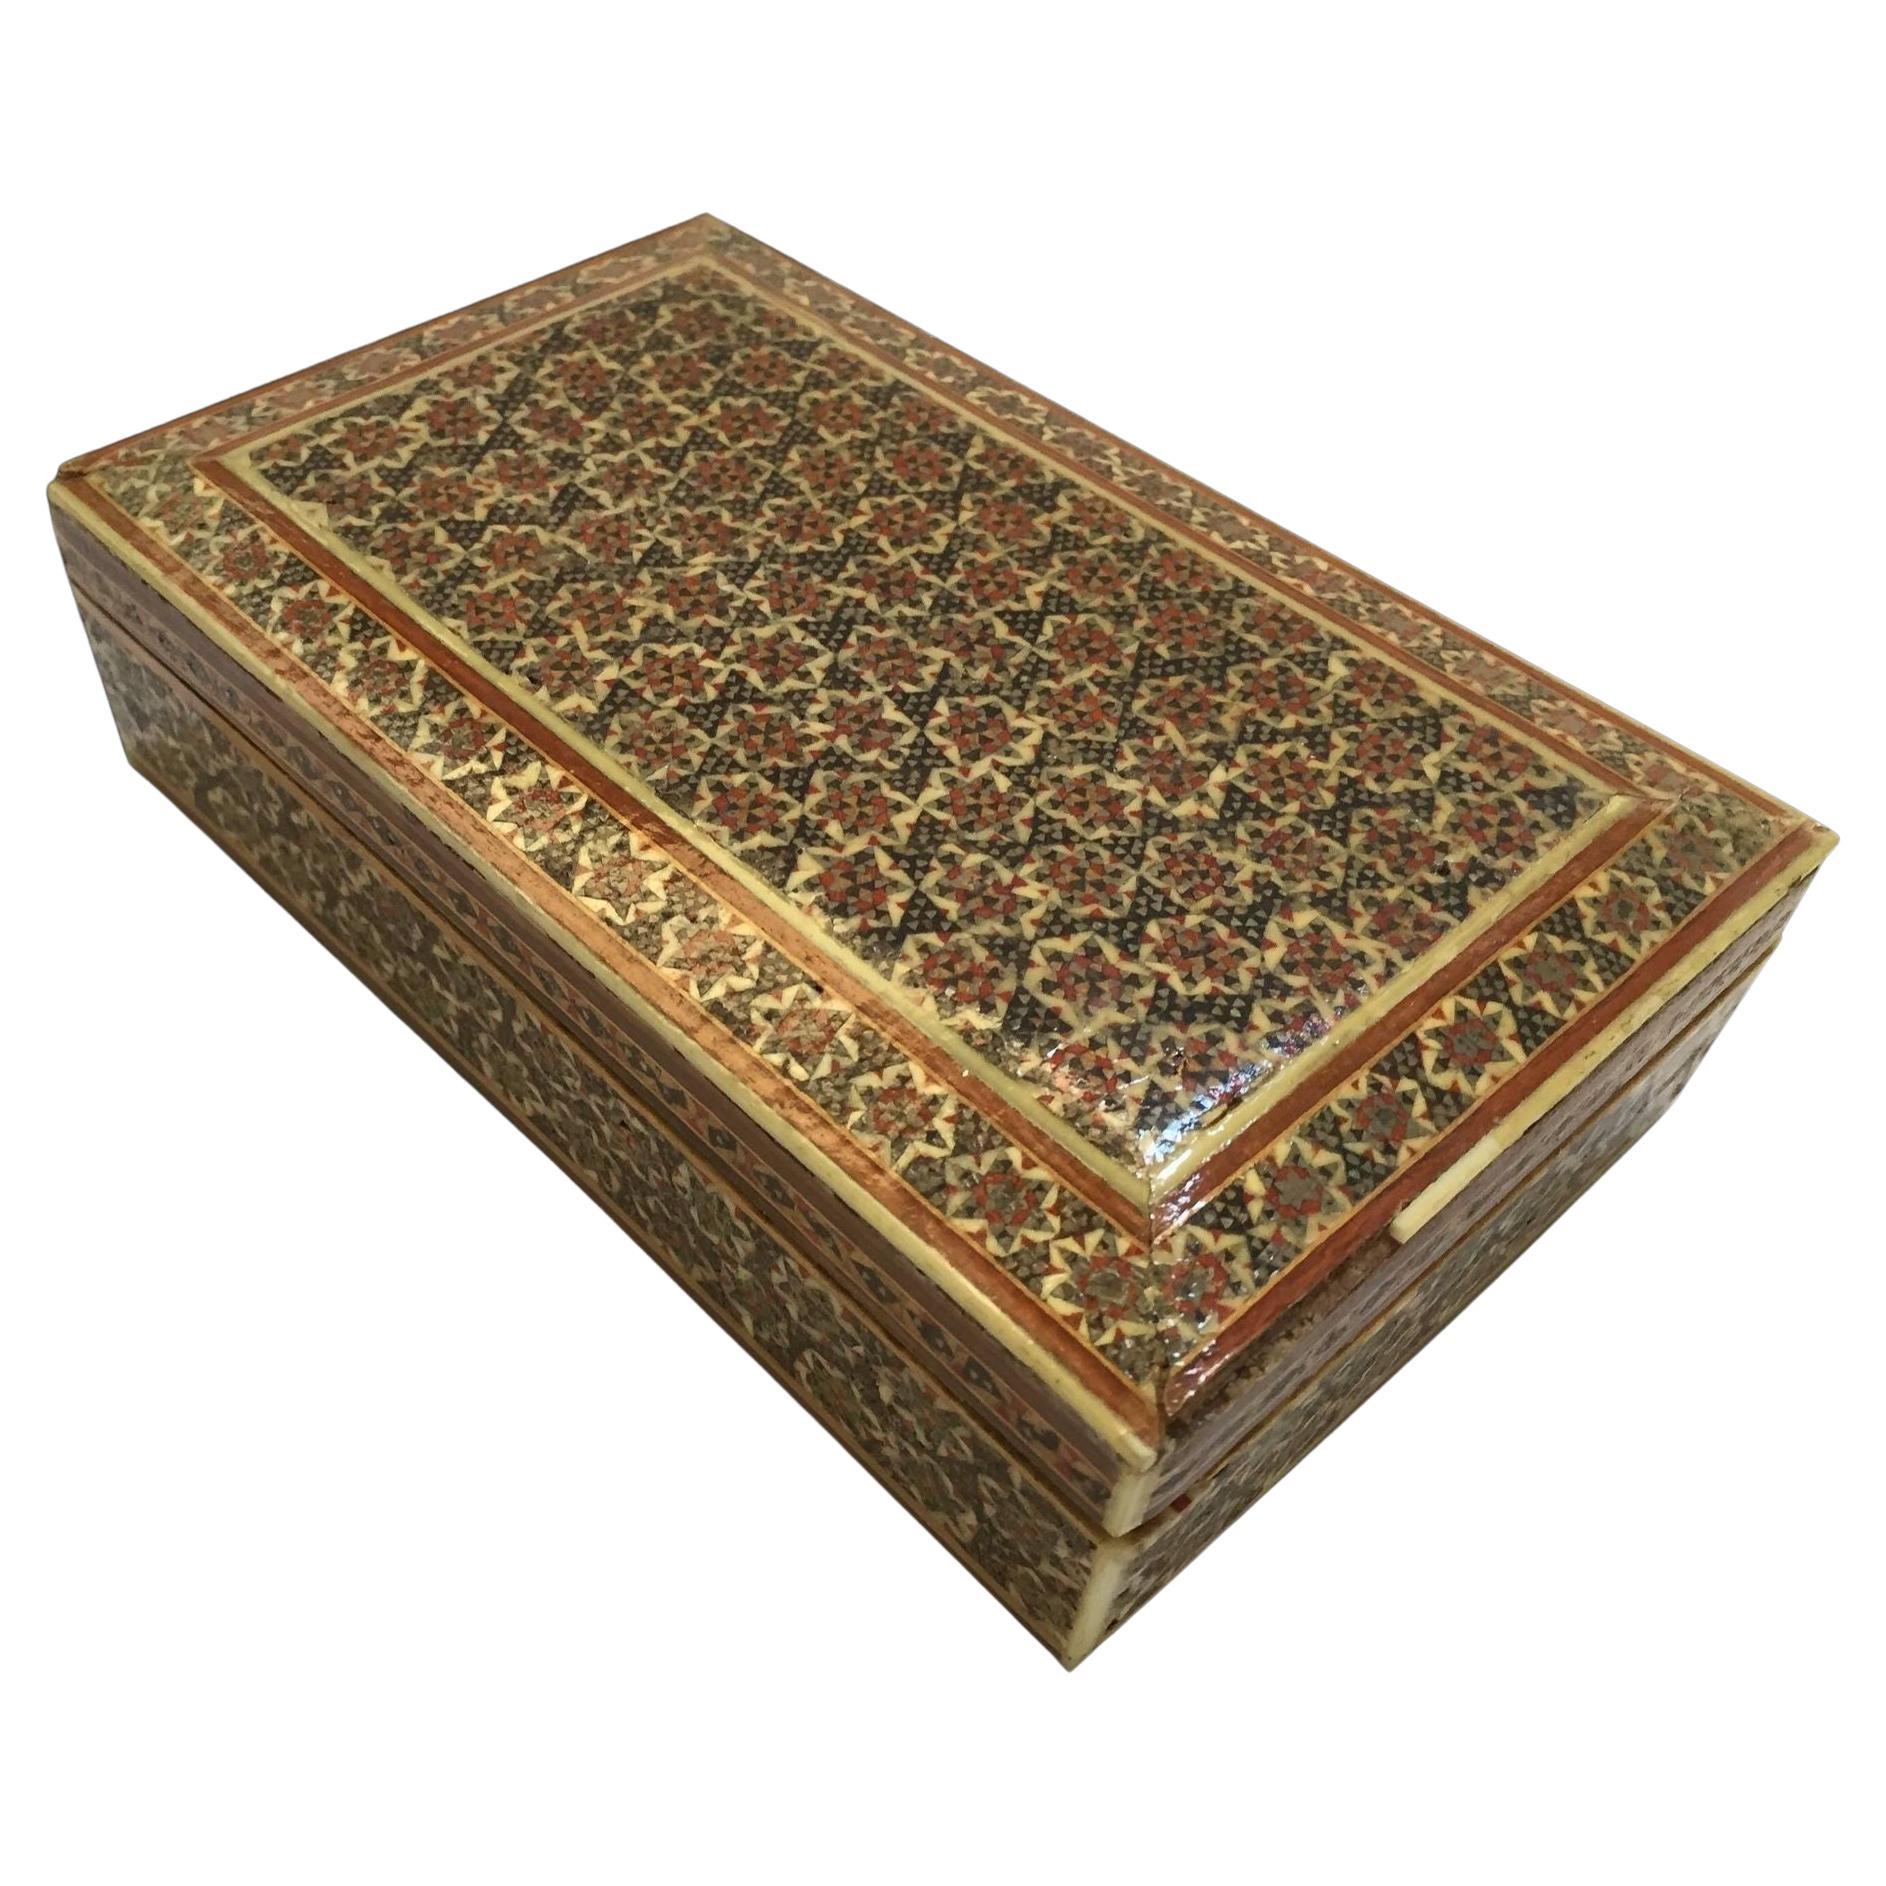 Boîte persane à micro-mosaïque